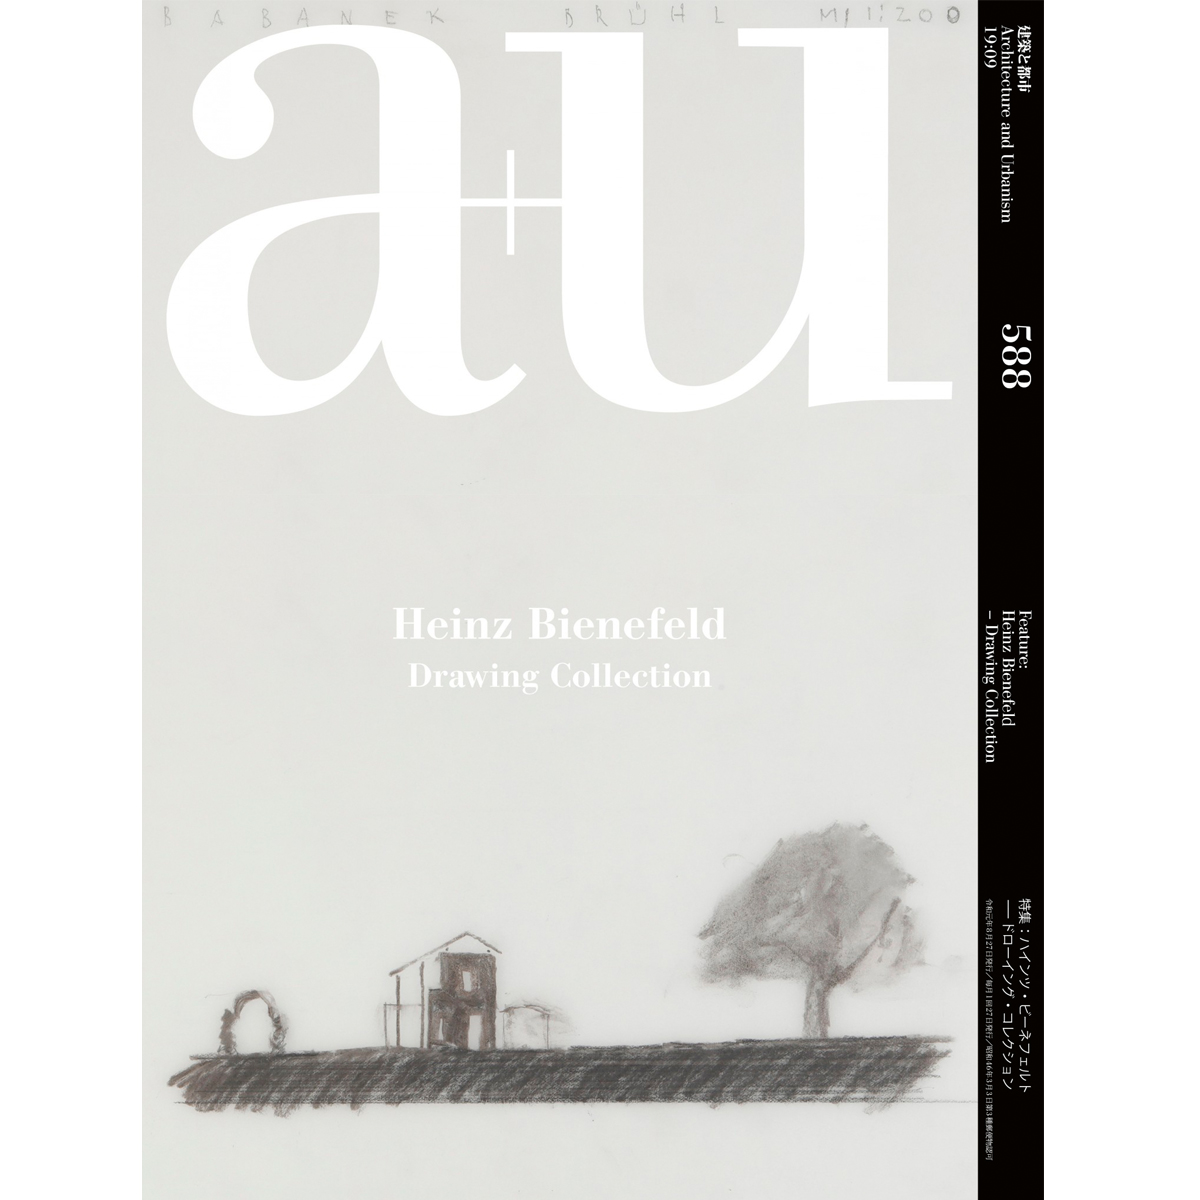 a+u: Heinz Bienefeld